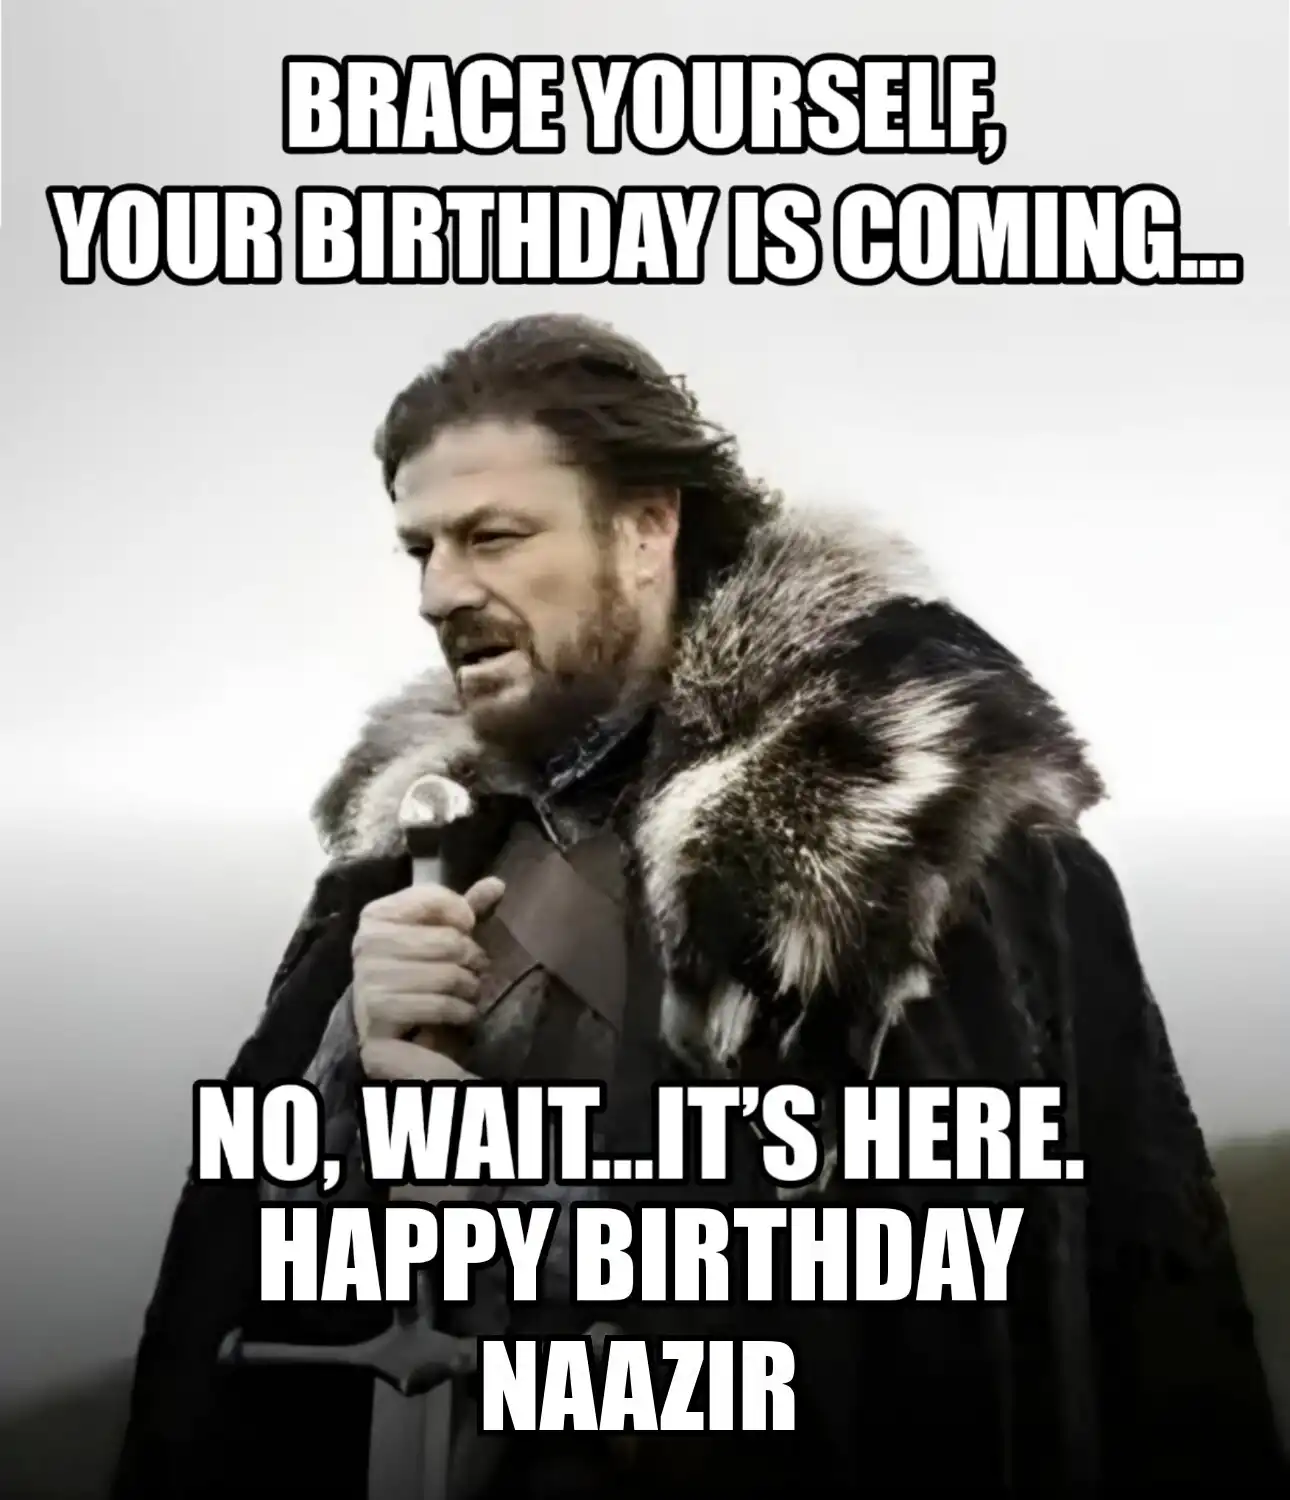 Happy Birthday Naazir Brace Yourself Your Birthday Is Coming Meme